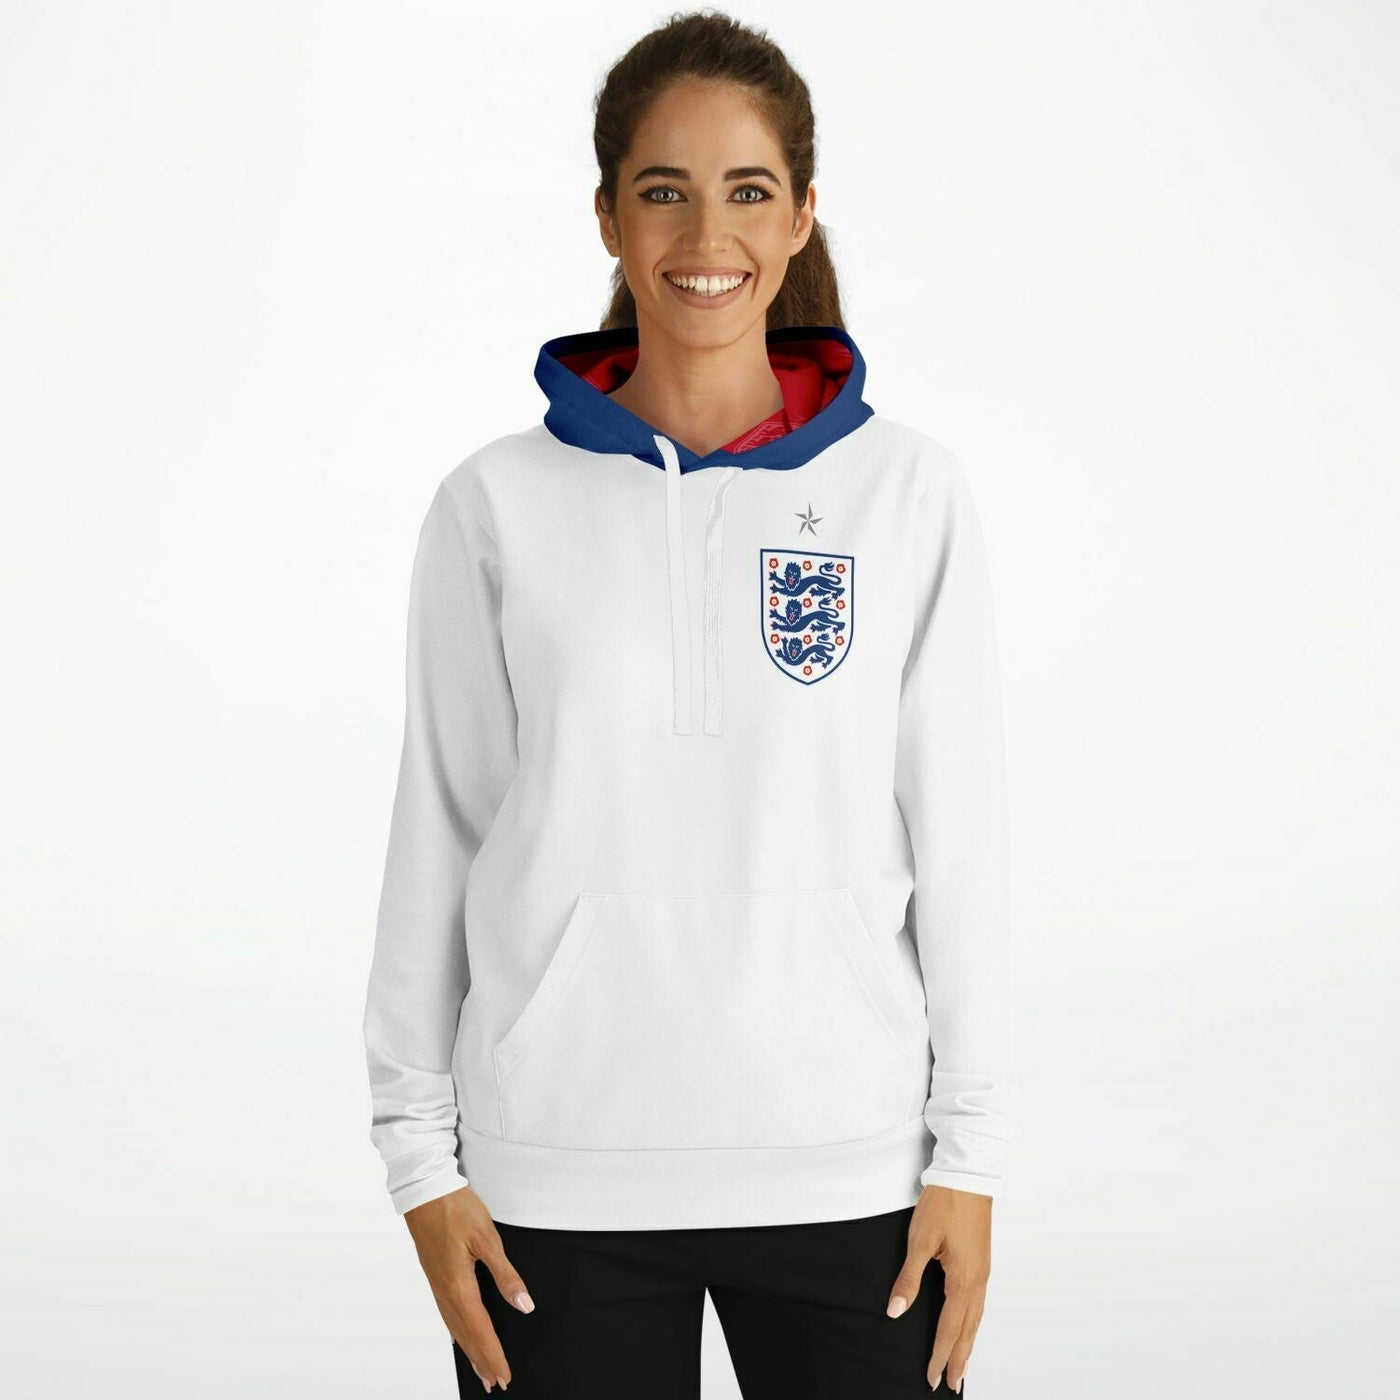 England National Team Hoodie | British Retro Soccer Hoodie